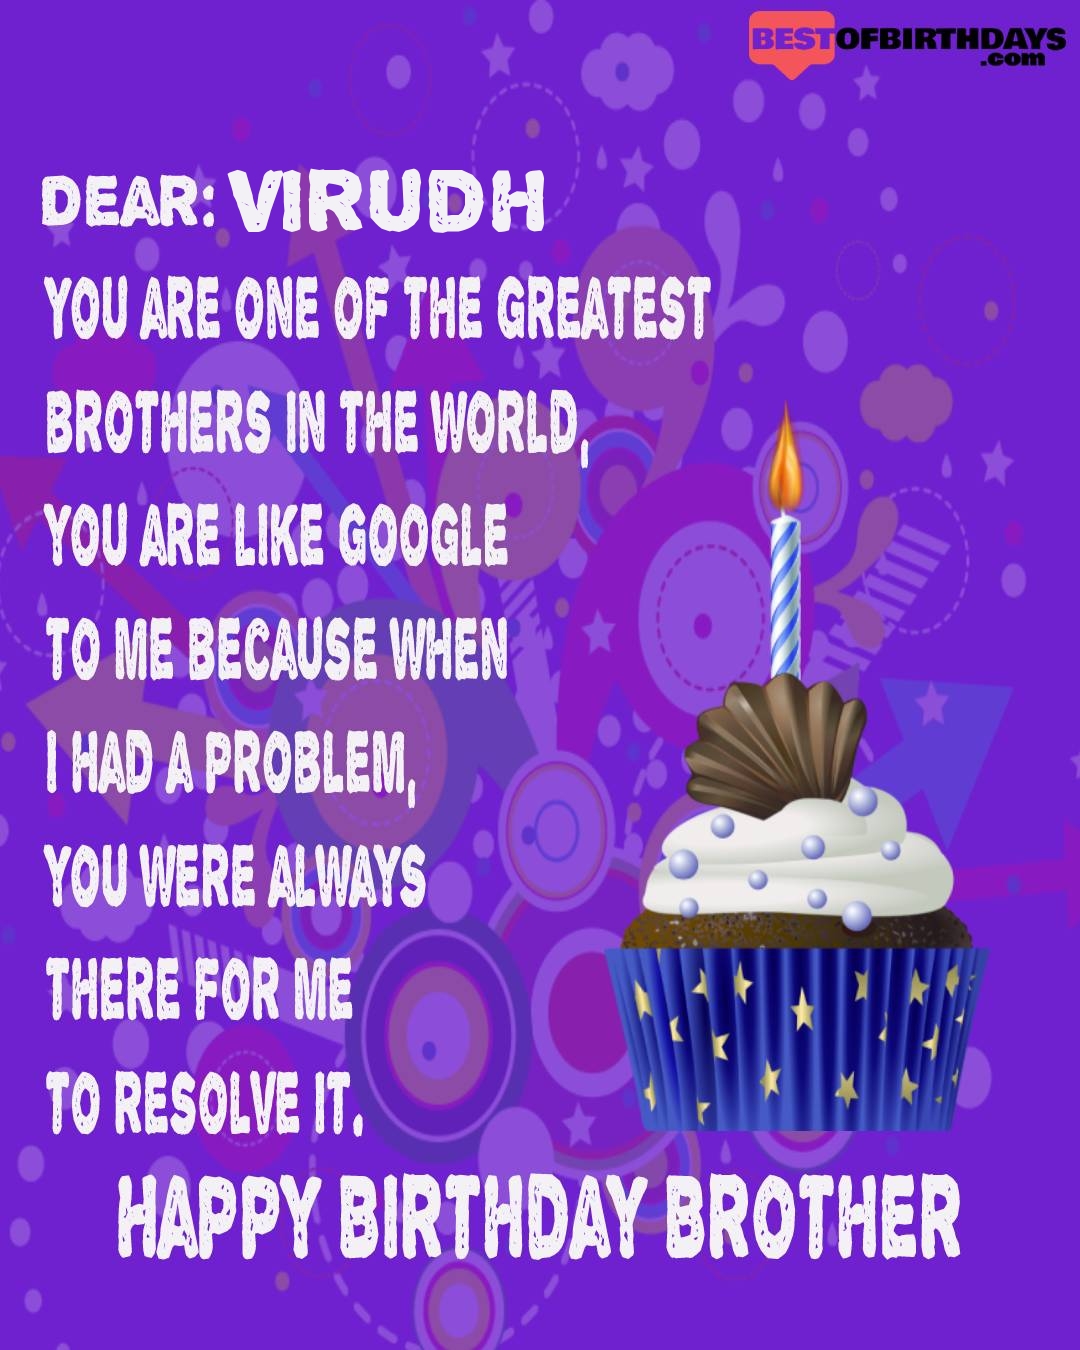 Happy birthday virudh bhai brother bro